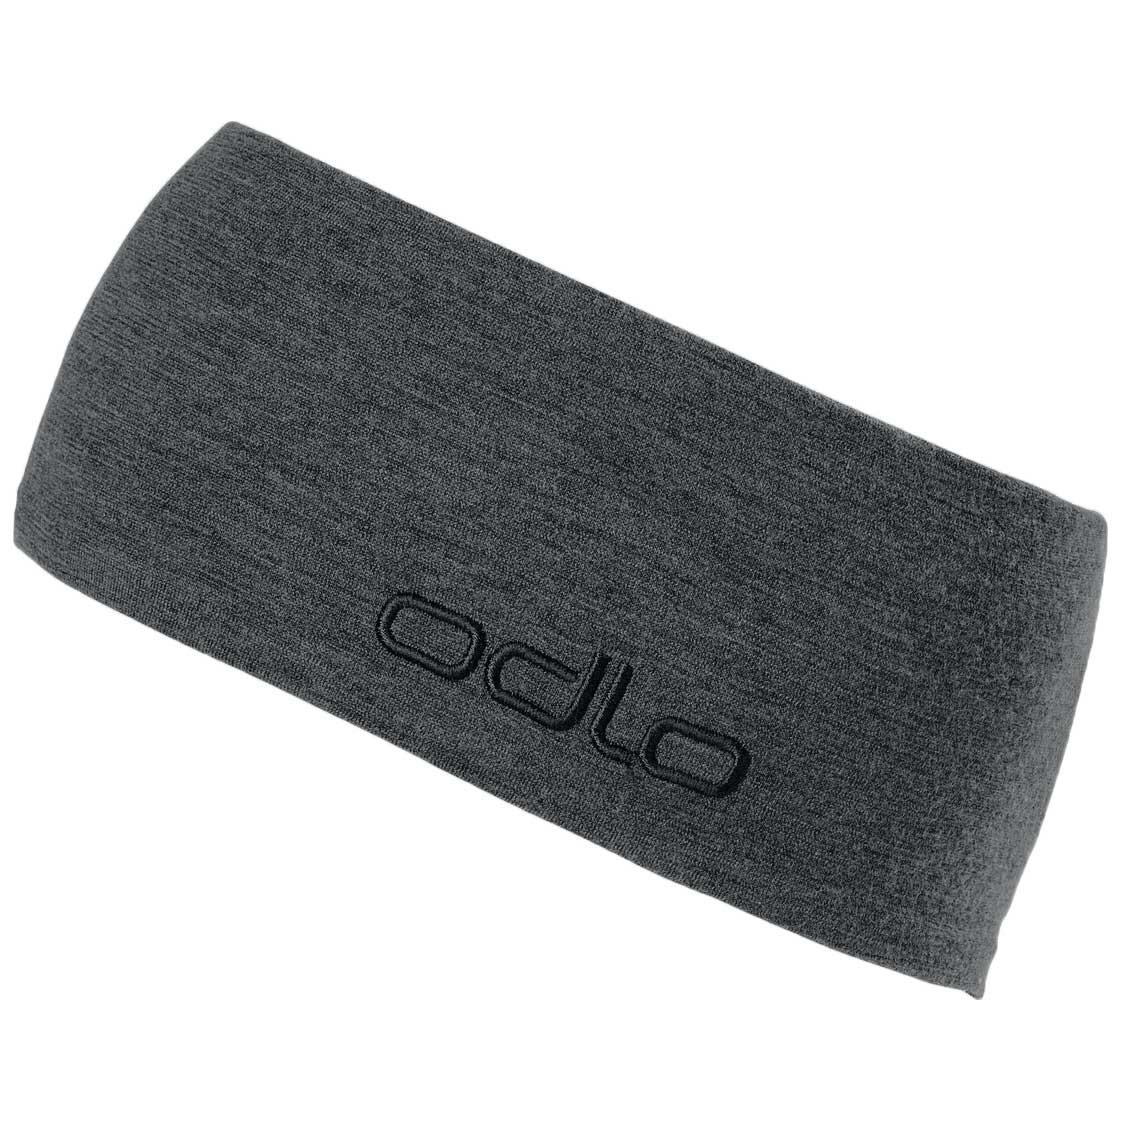 Picture of Odlo Revelstoke Performance Wool Headband - odlo graphite grey melange